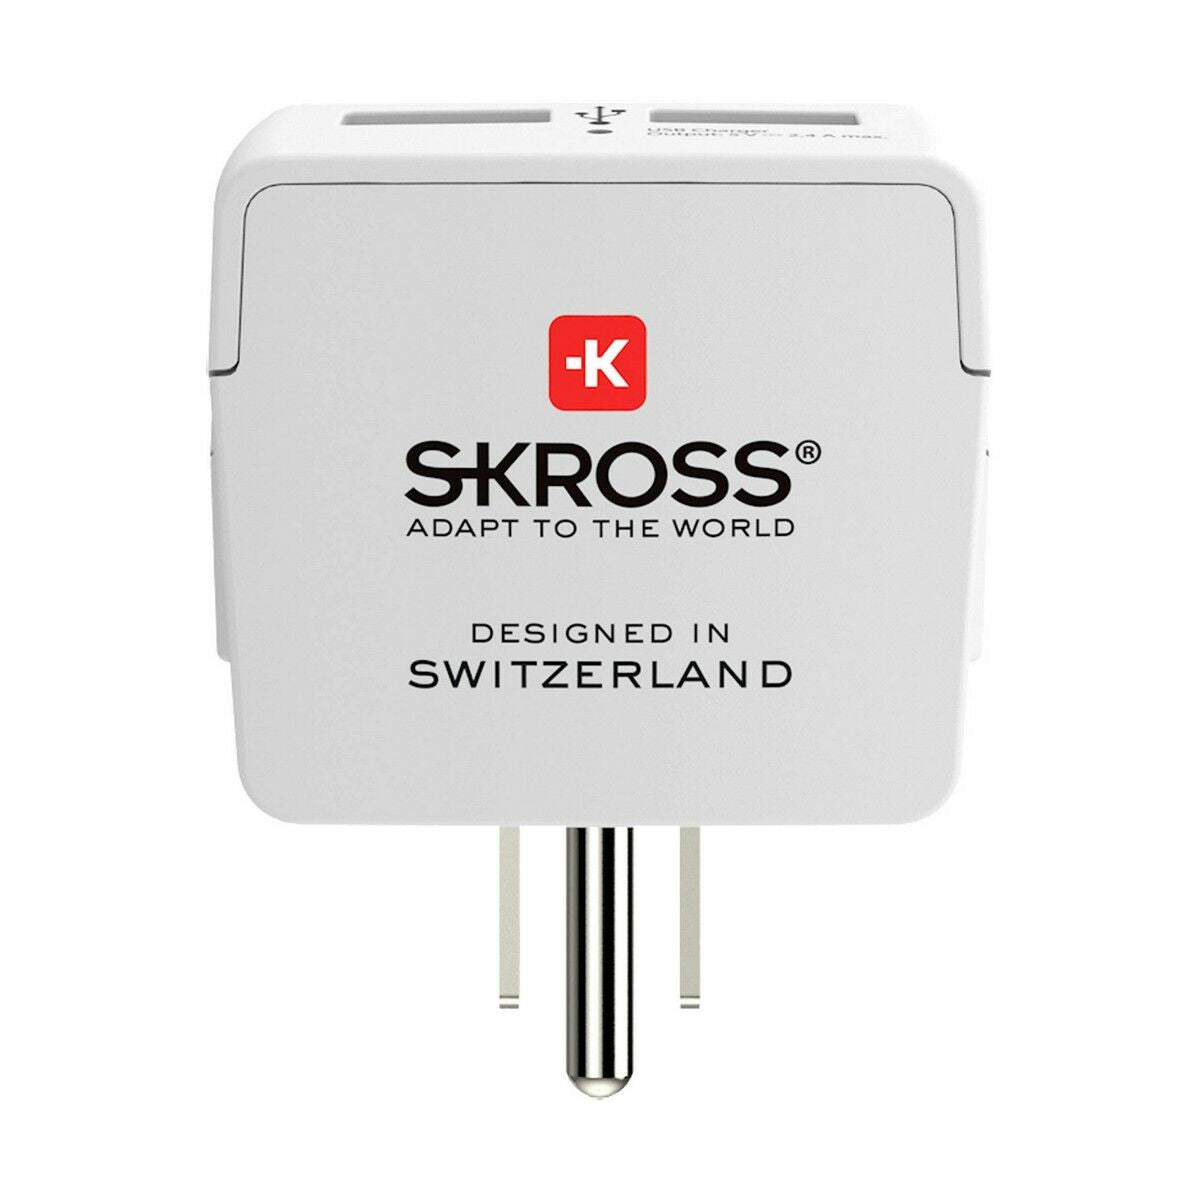 Adaptateur de courant Skross 1500281 USB x 2 Européen États-Unis